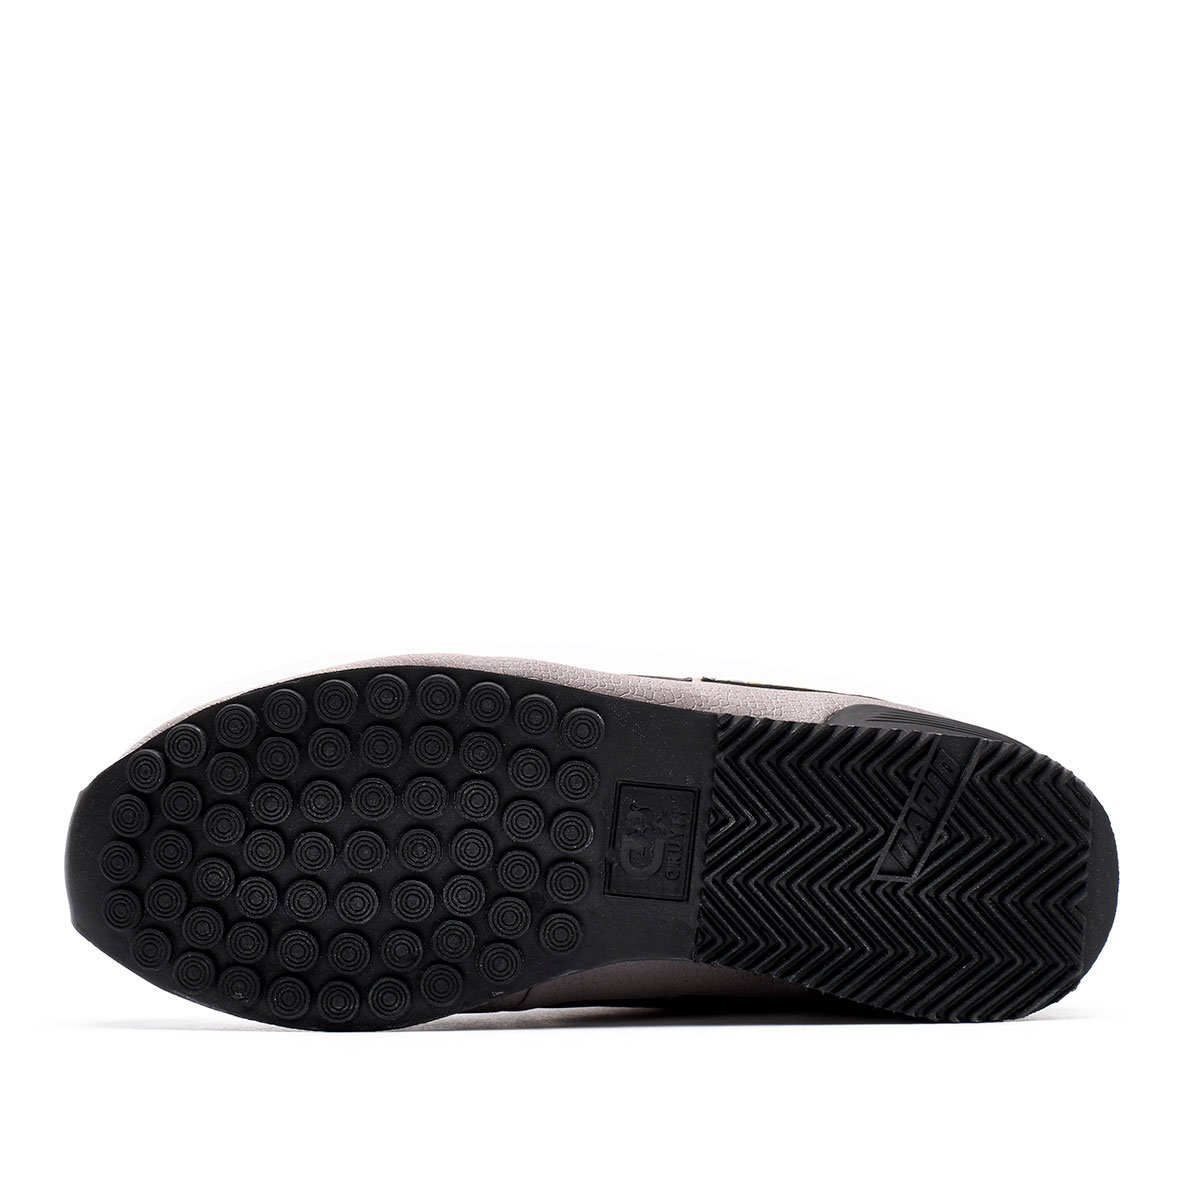 Cruyff LM 62 grey Дамски спортни обувки CC6031153381